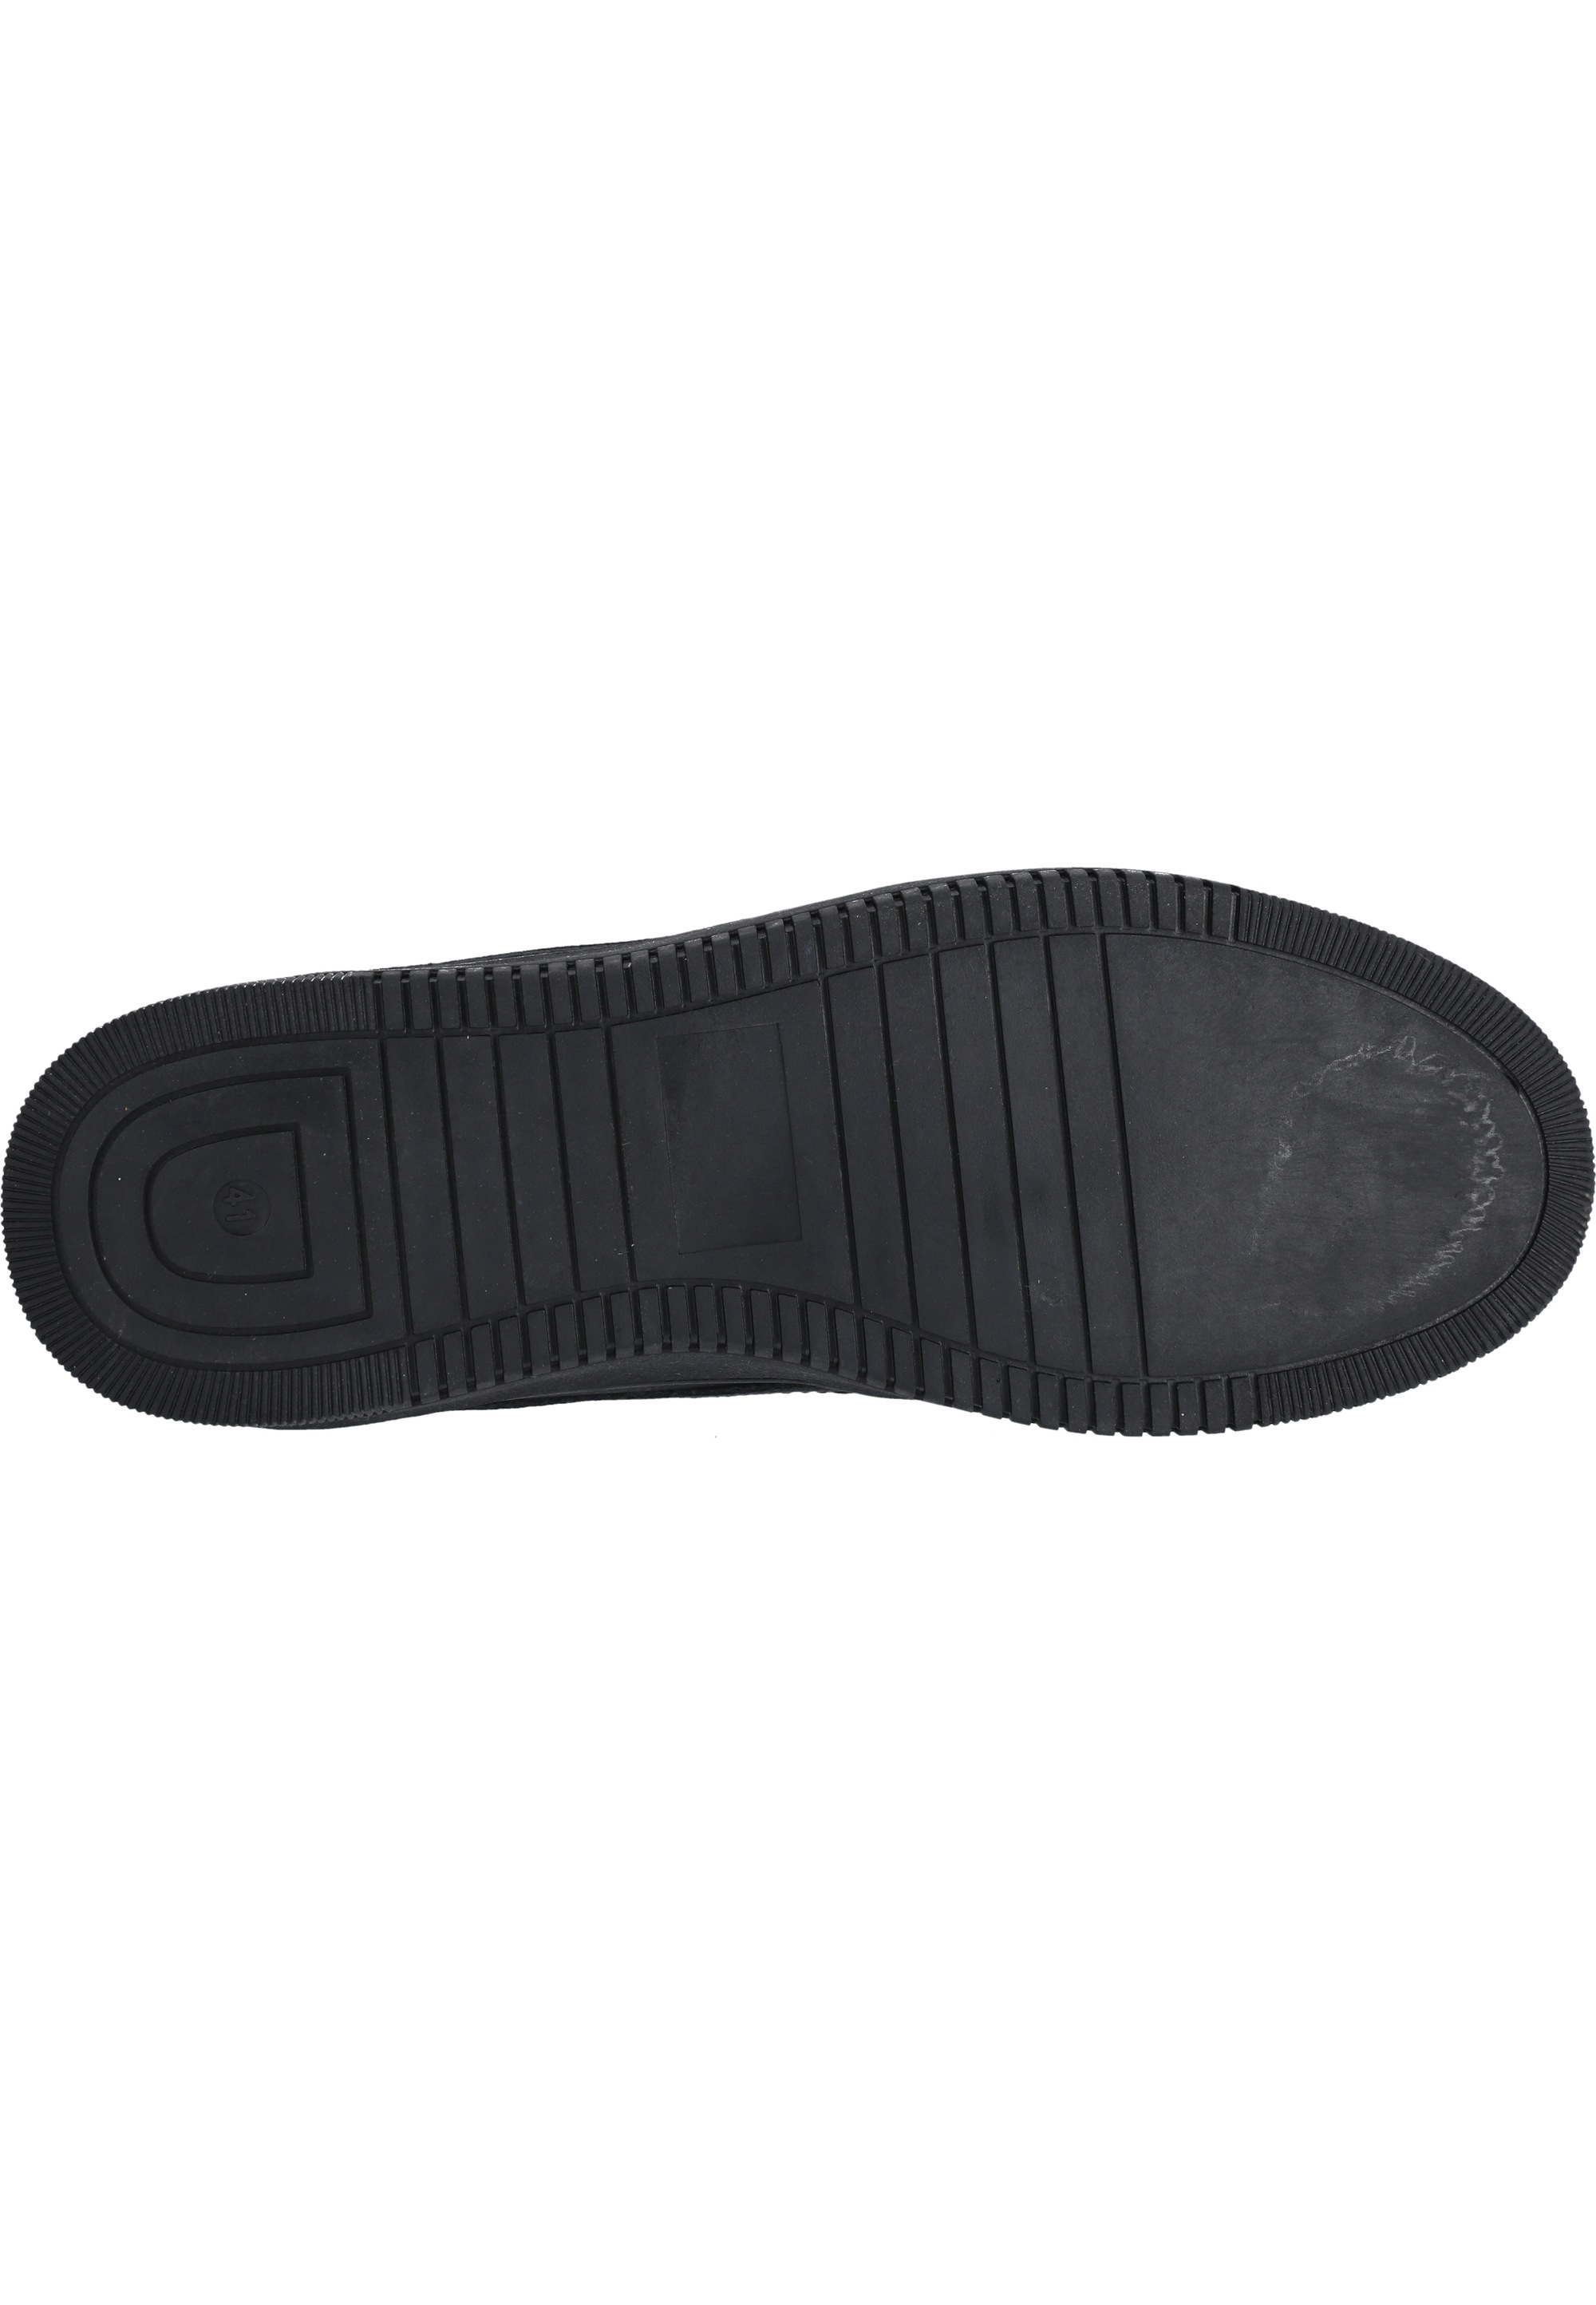 ENDURANCE Sneaker »Varhil«, mit rutschhemmendem Allwetterprofil